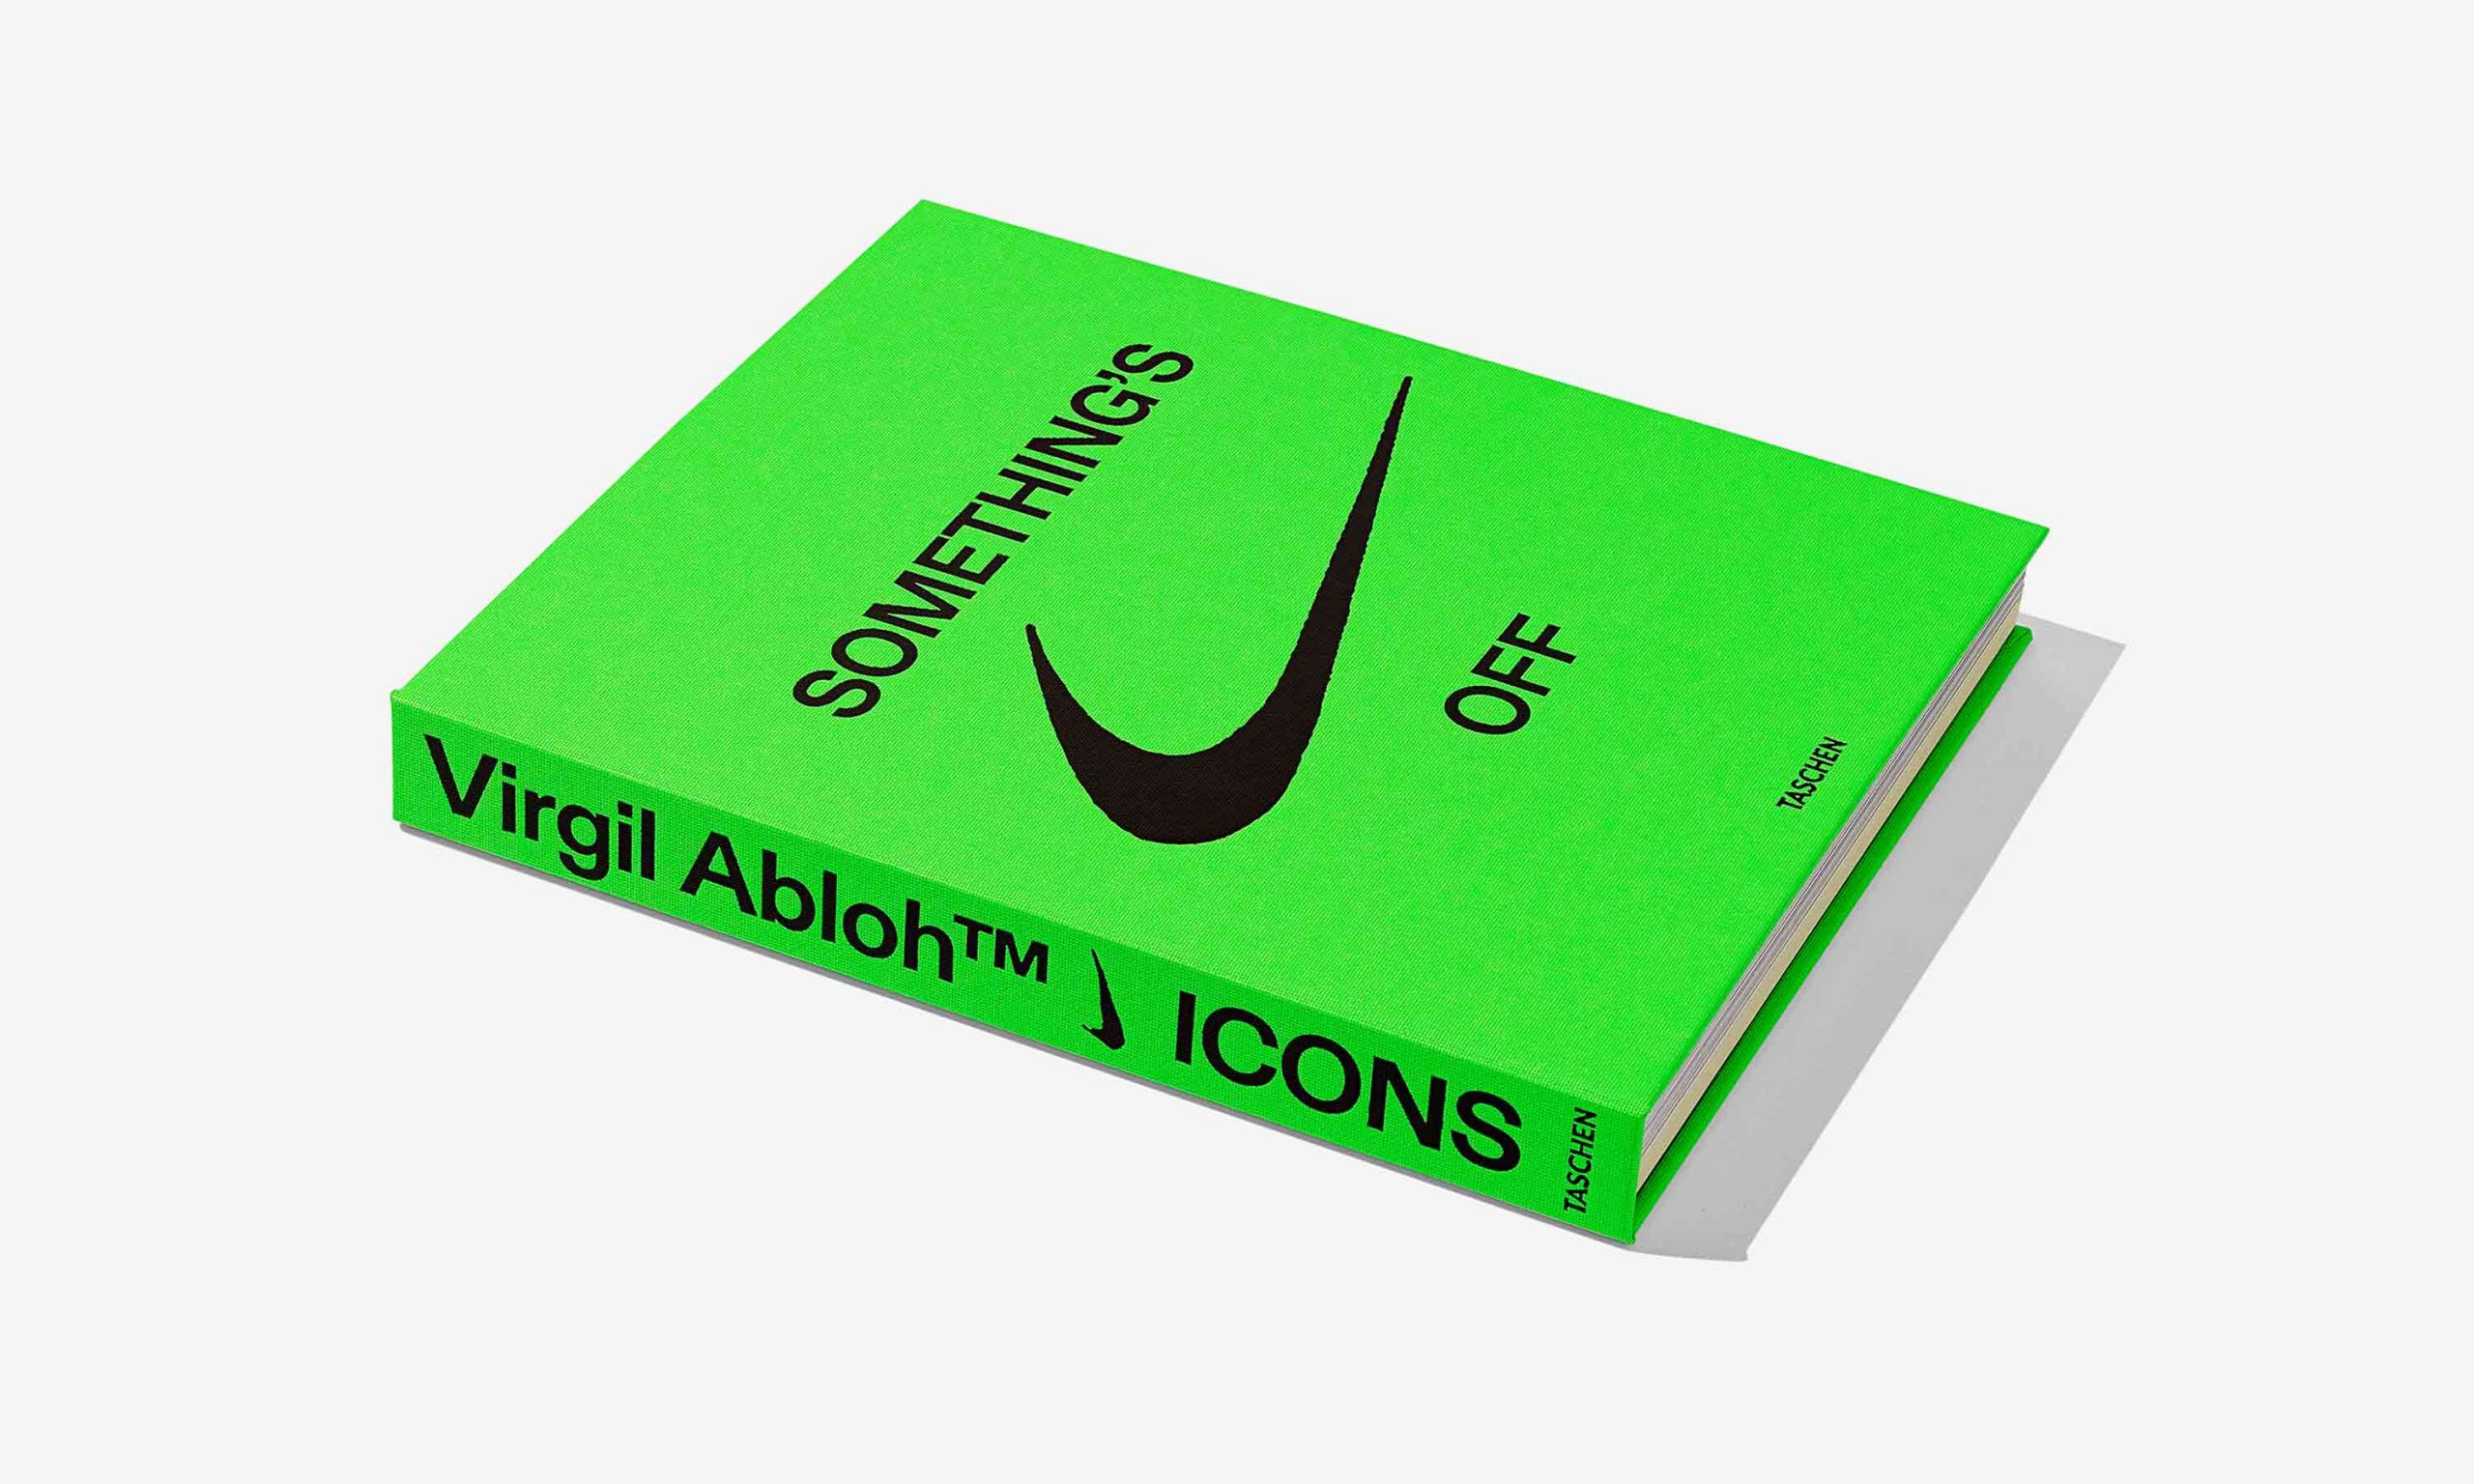 THE TEN「Archive」，Virgil Abloh 携手 Nike 出品《ICONS》档案册